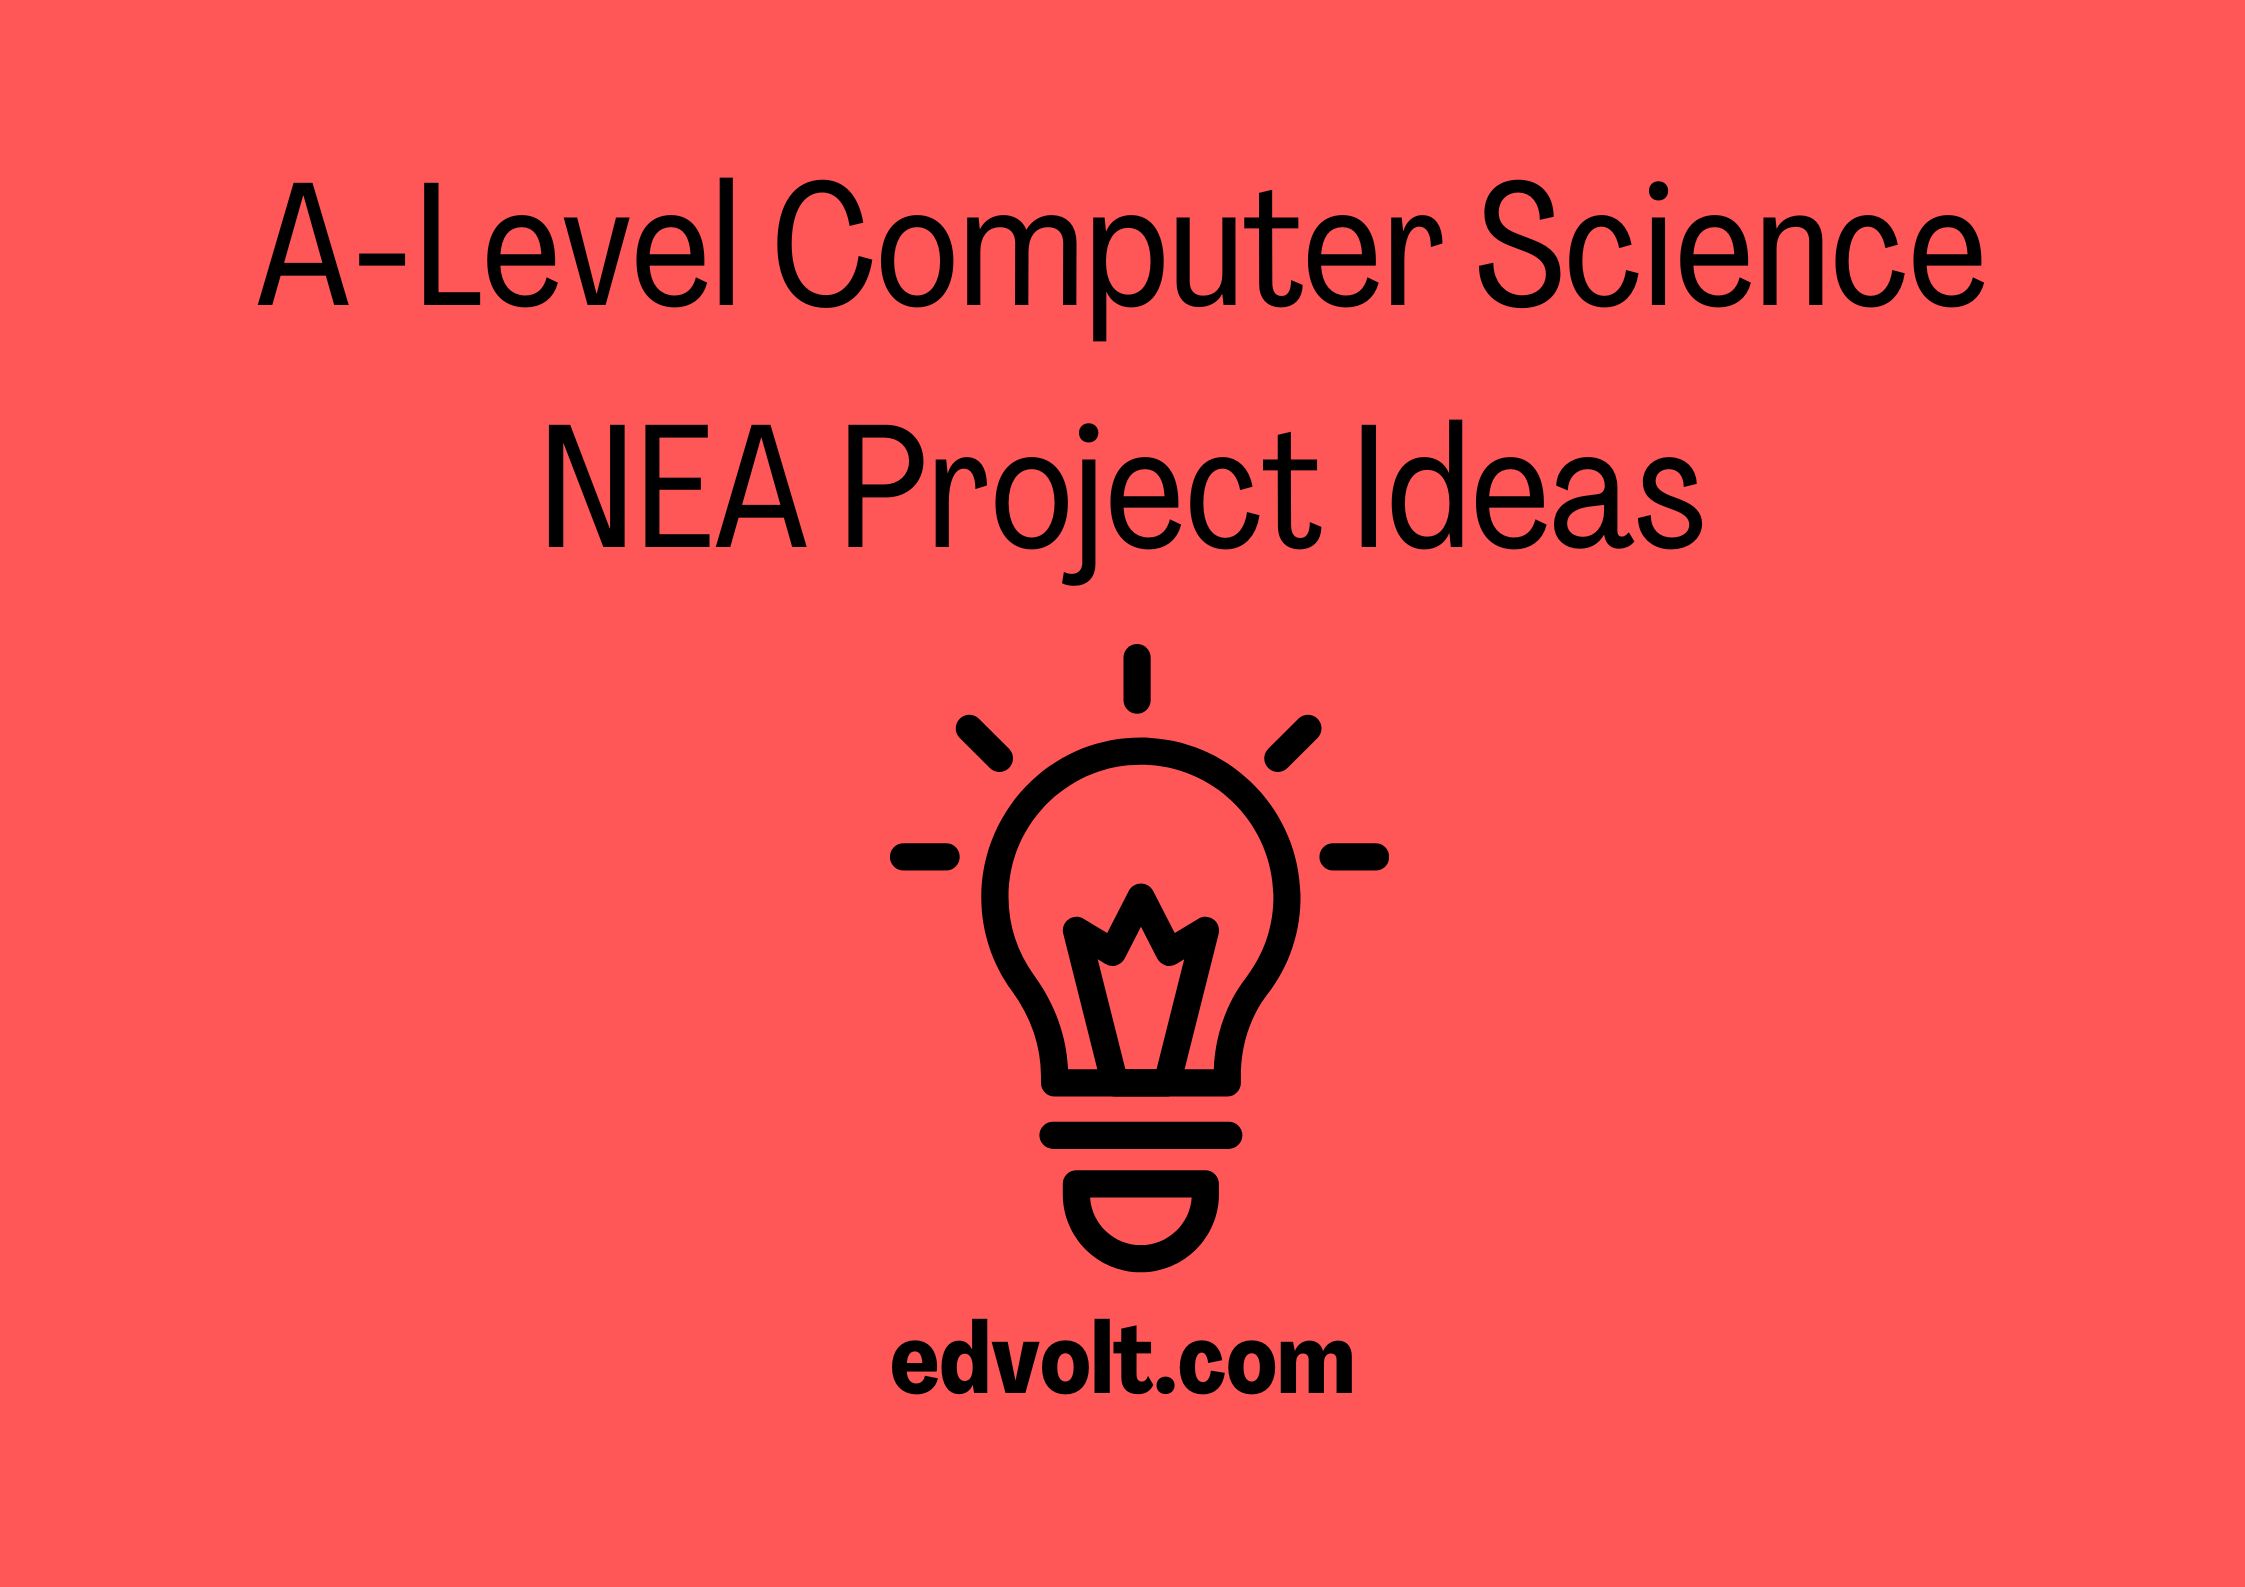 A-Level Computer Science NEA Project Ideas